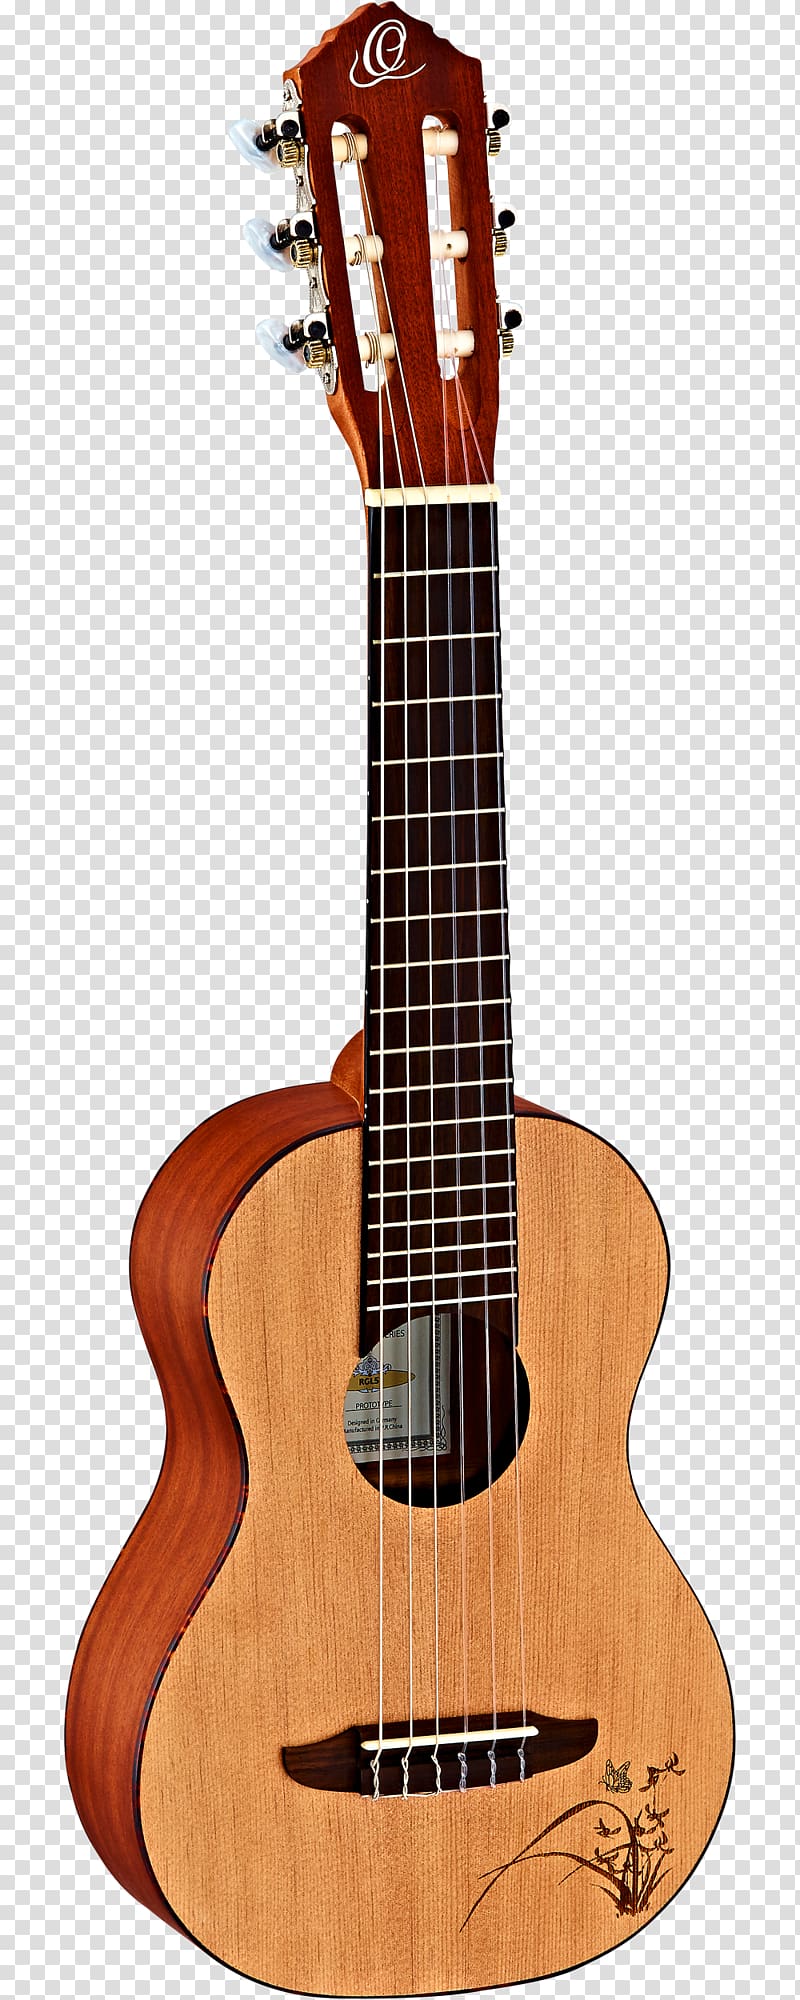 Ukulele Guitalele Musical Instruments Classical guitar, amancio ortega transparent background PNG clipart